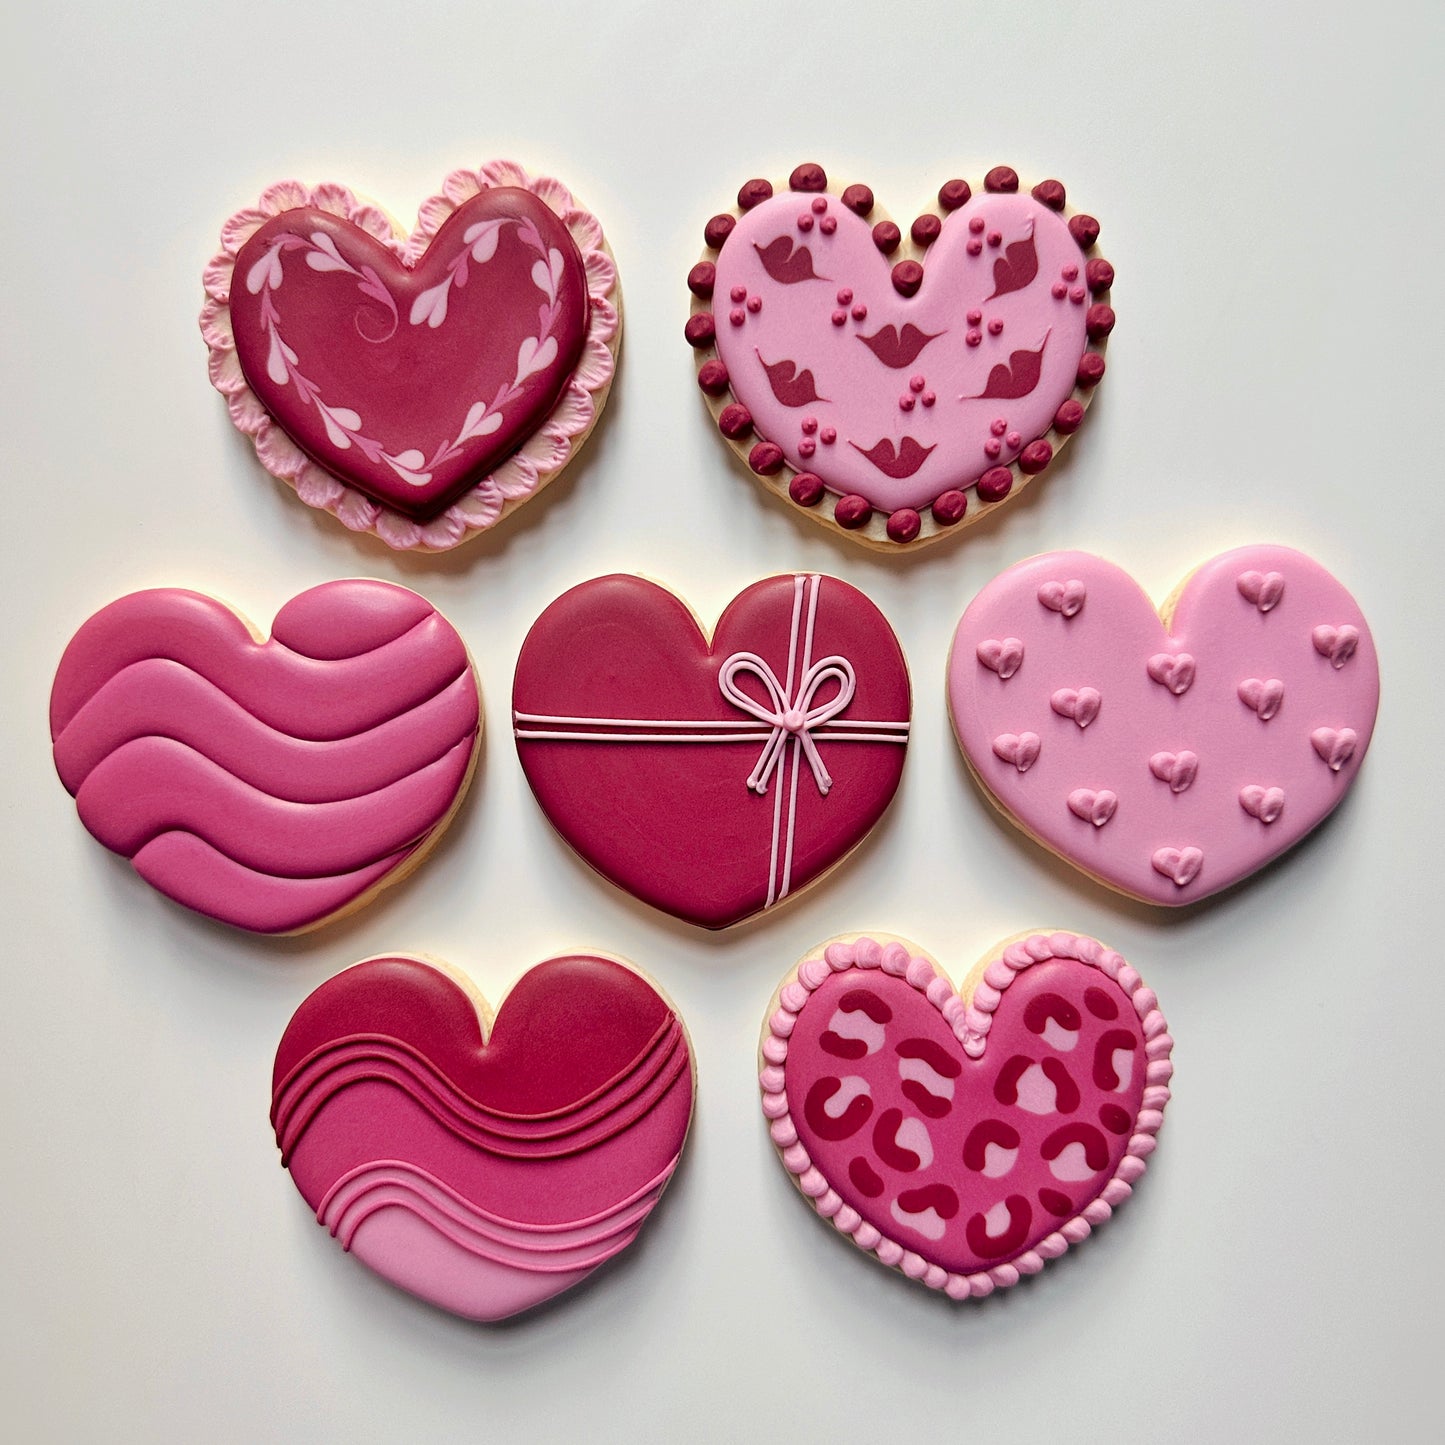 SWEET HEARTS ~ Advanced Beginner/Intermediate ~ Online Cookie Decorating Class